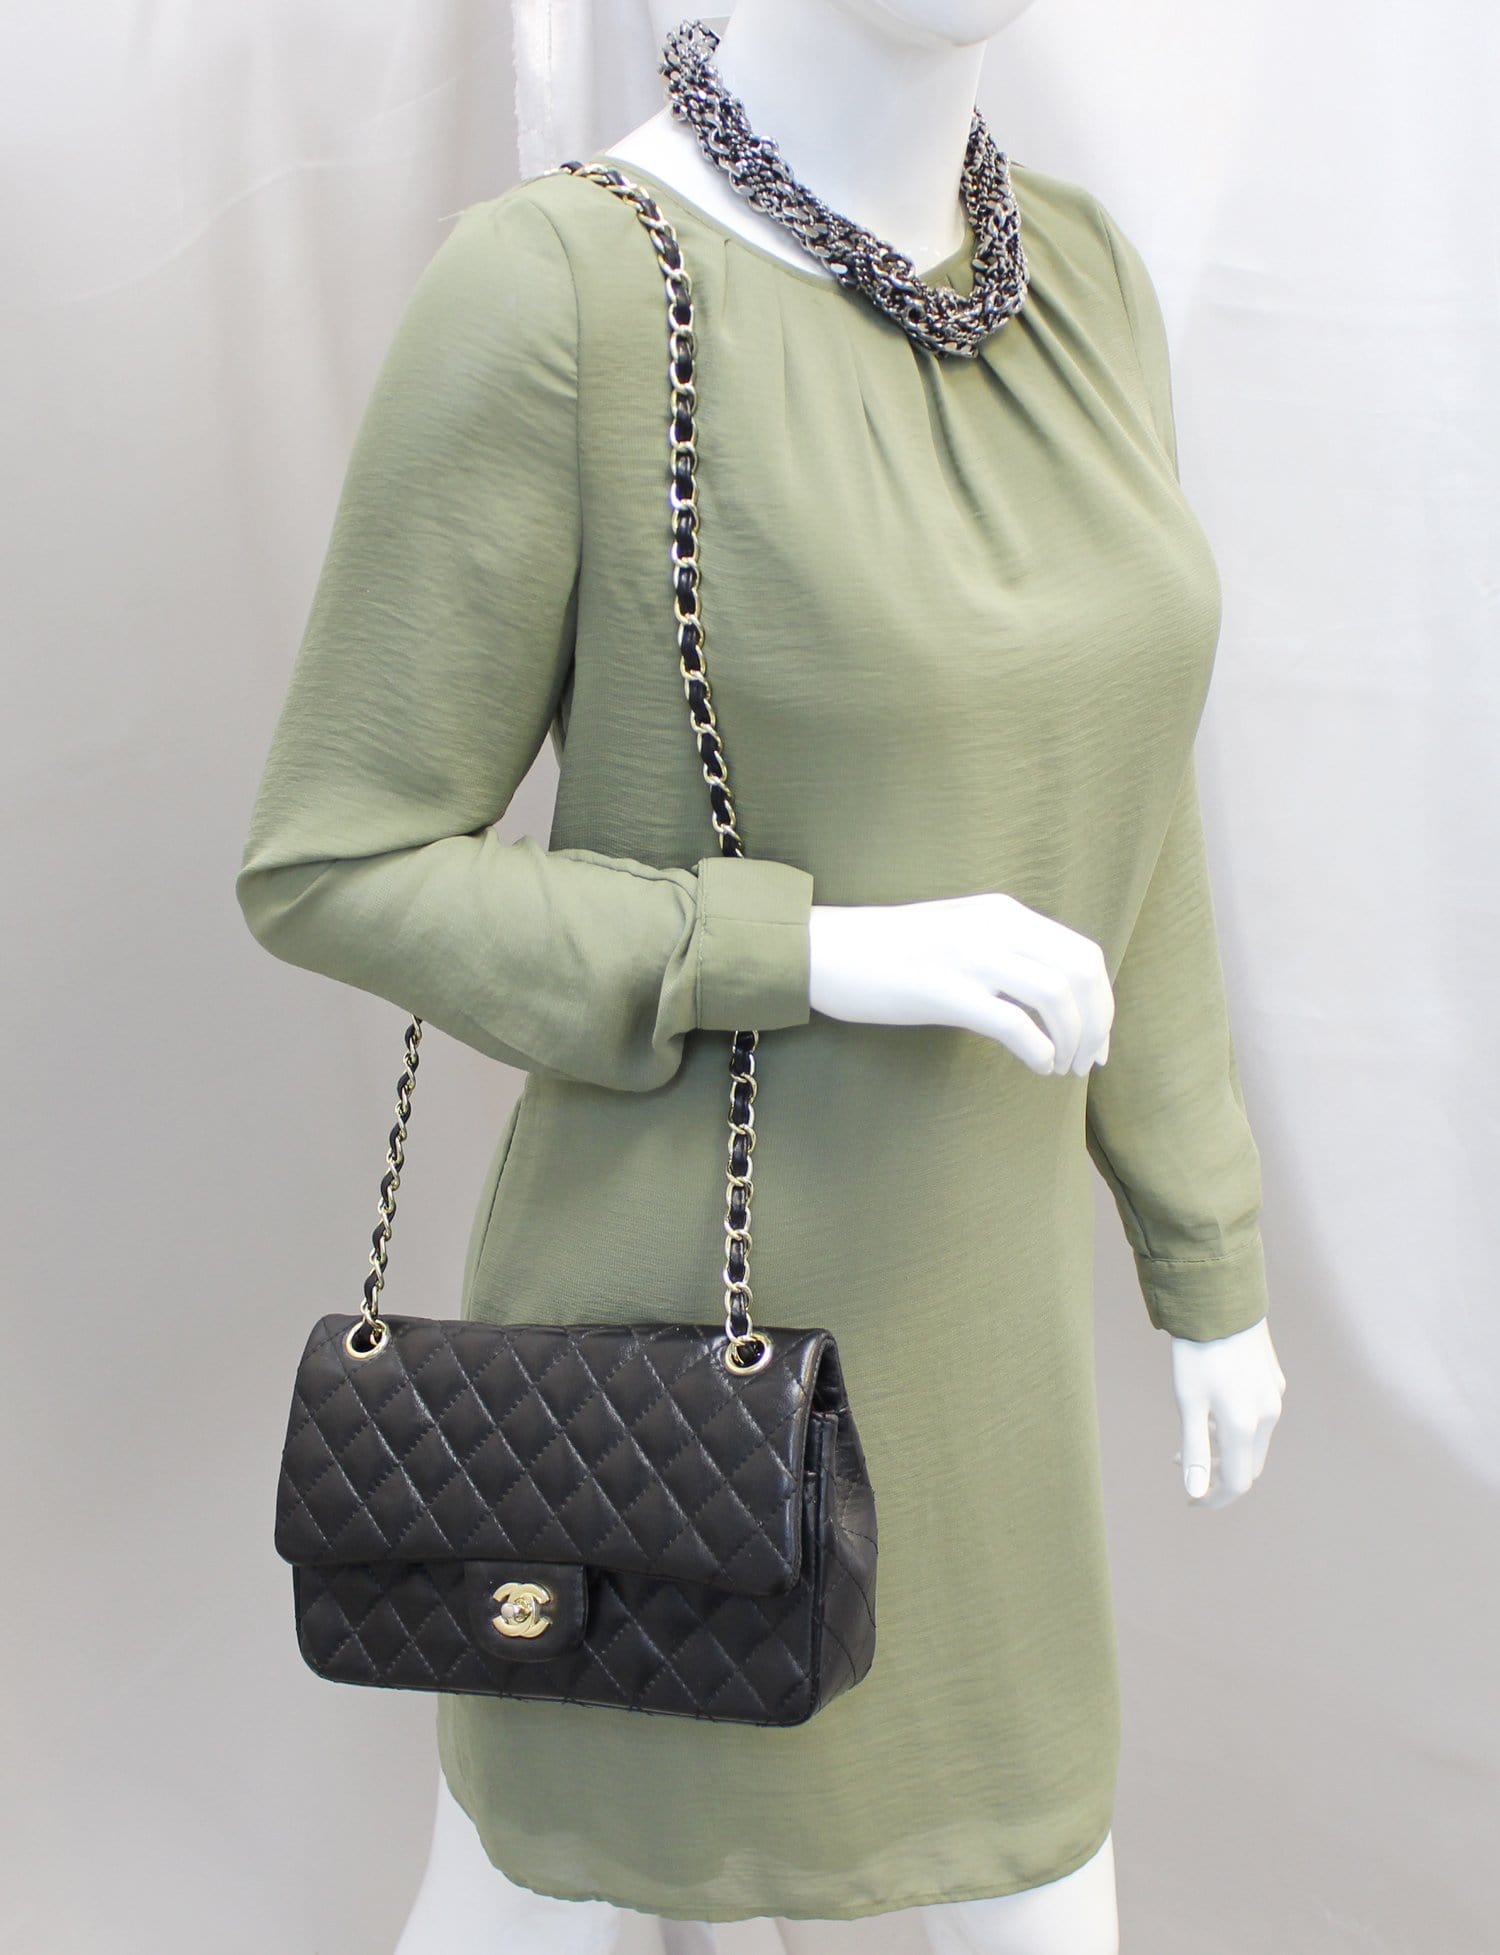 Chanel Black Lambskin Leather Medium Classic Double Flap Bag Chanel